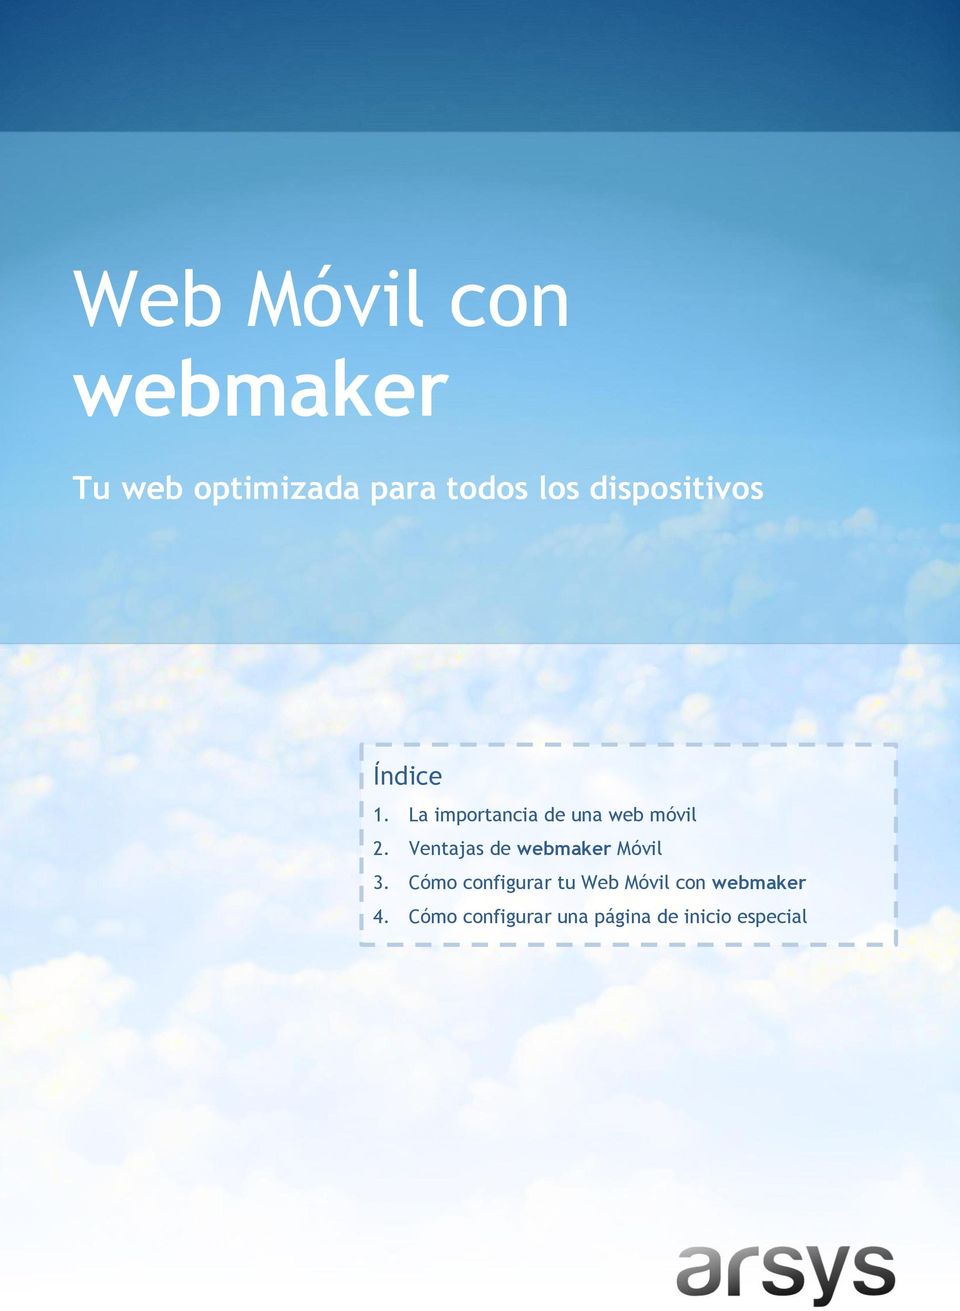 Ventajas de webmaker Móvil 3.